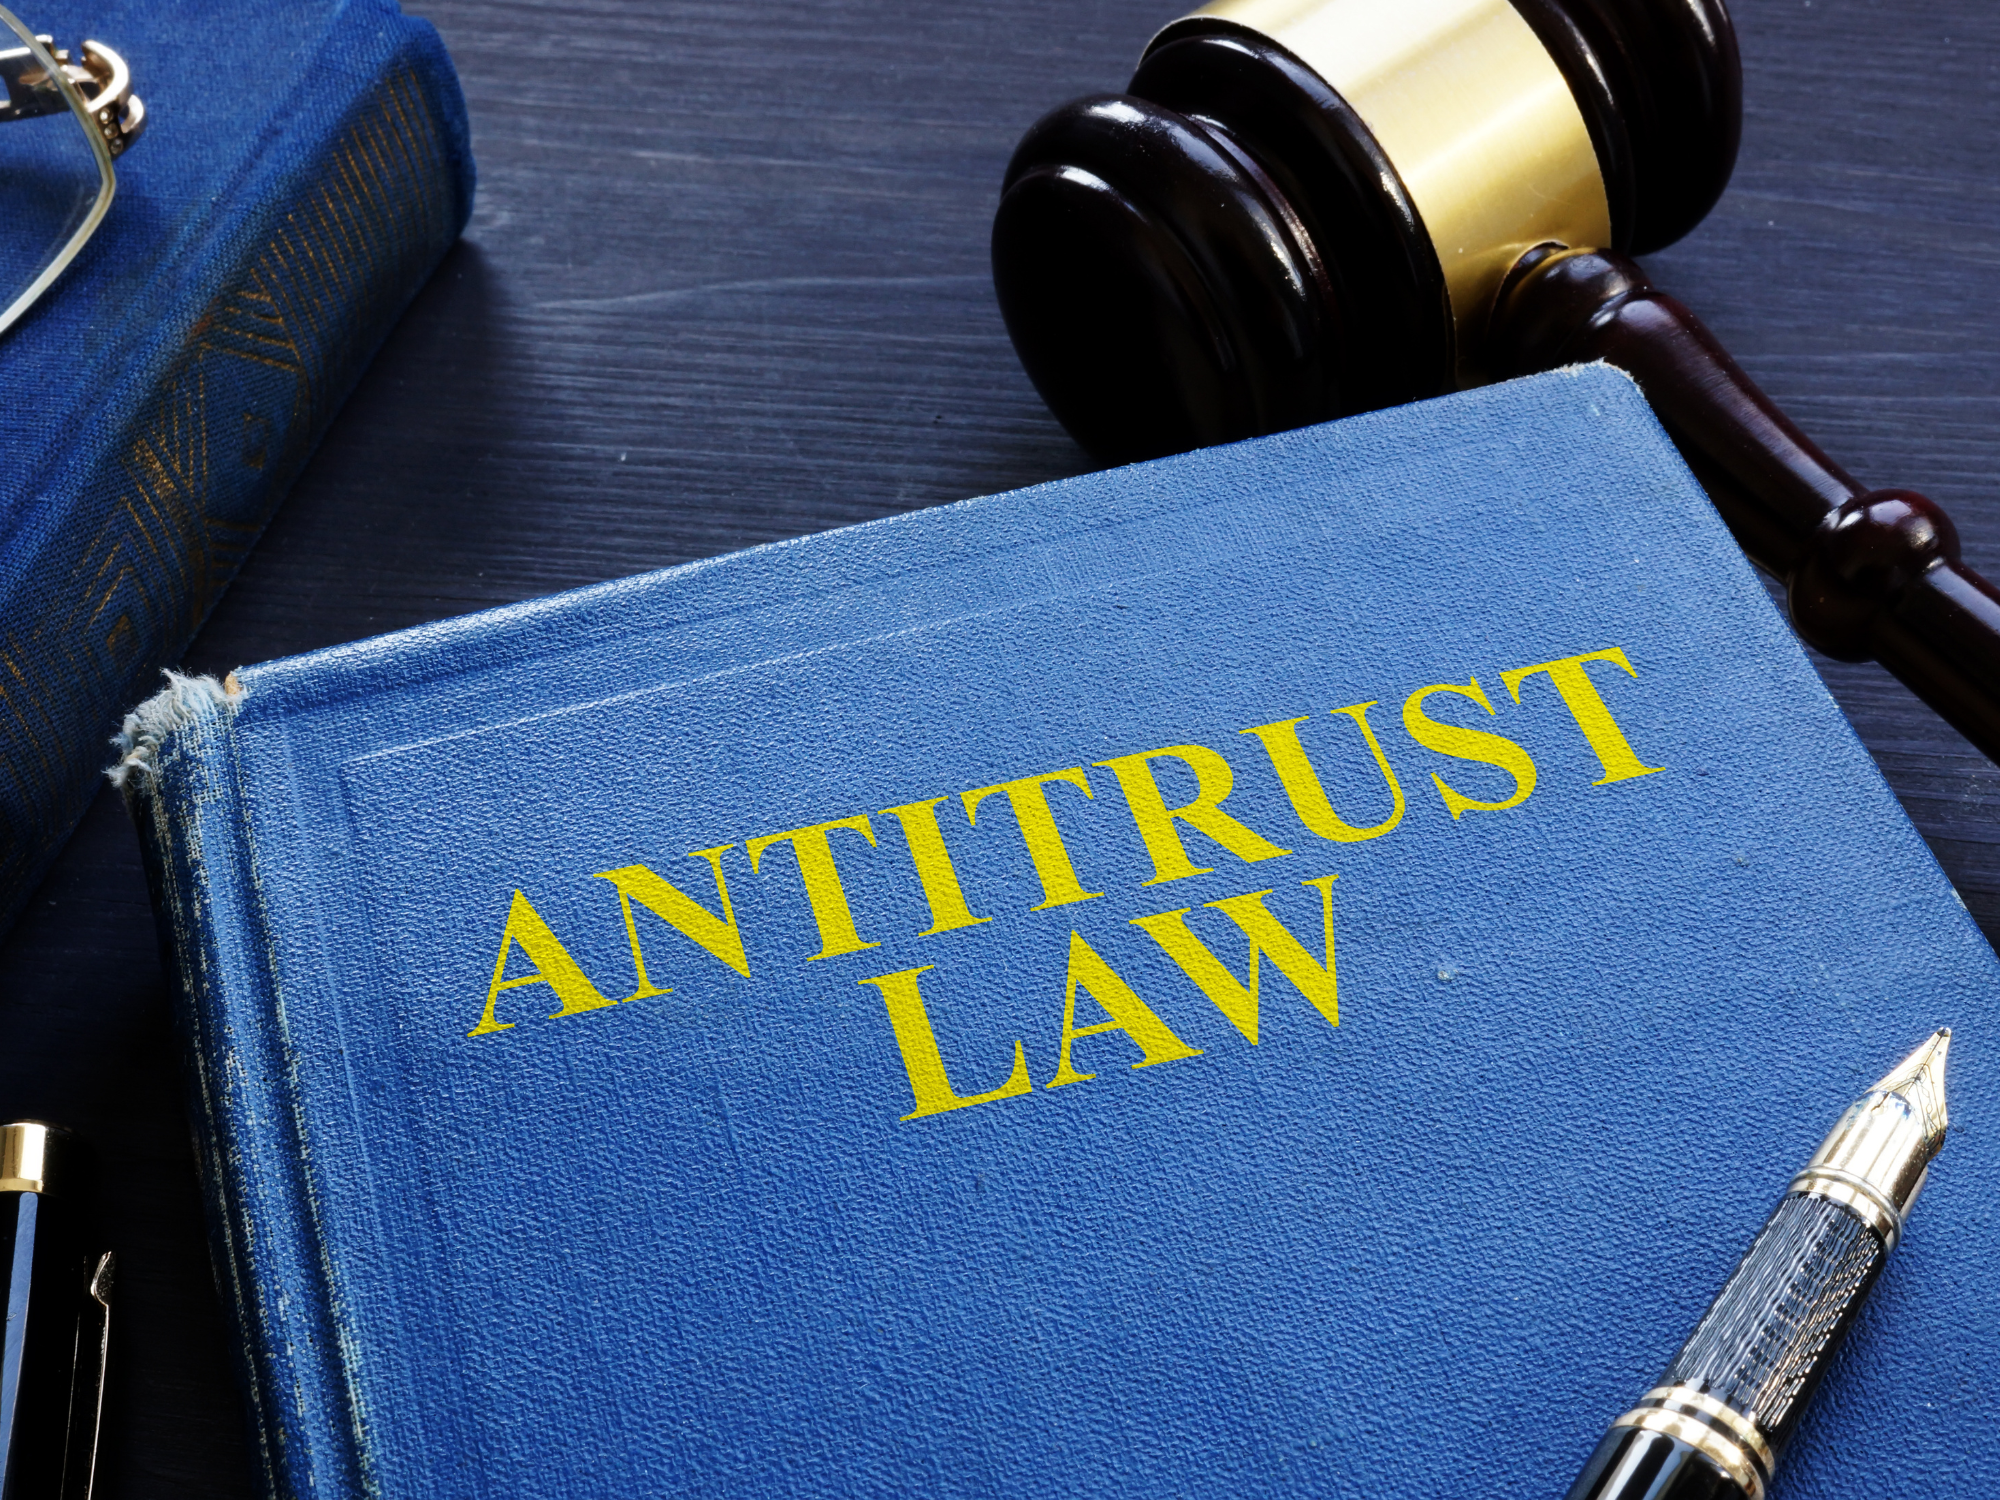 A book titled "Antitrust Law"